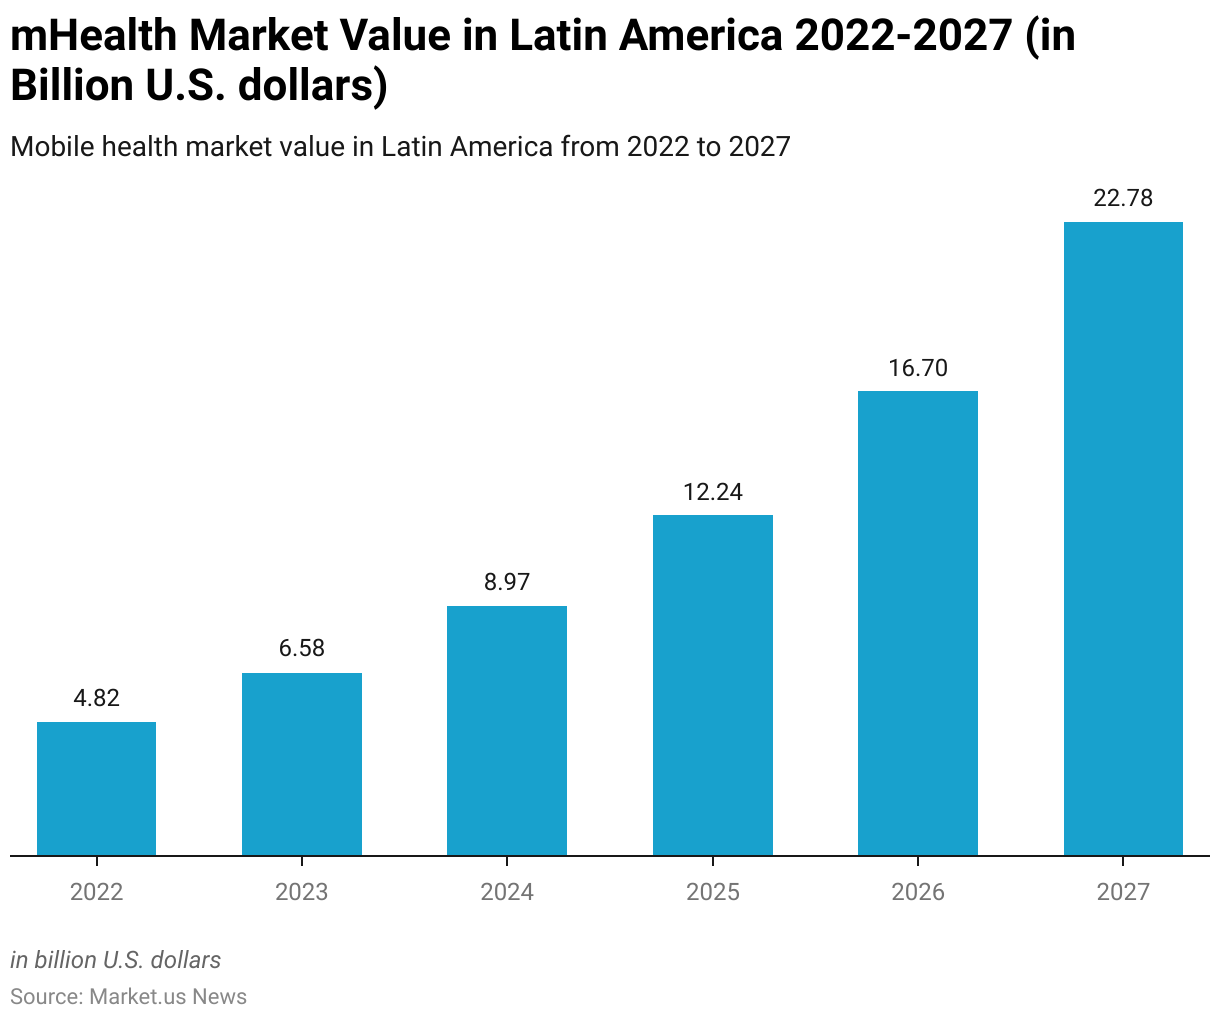 mHealth market value in Latin America 2022-2027
